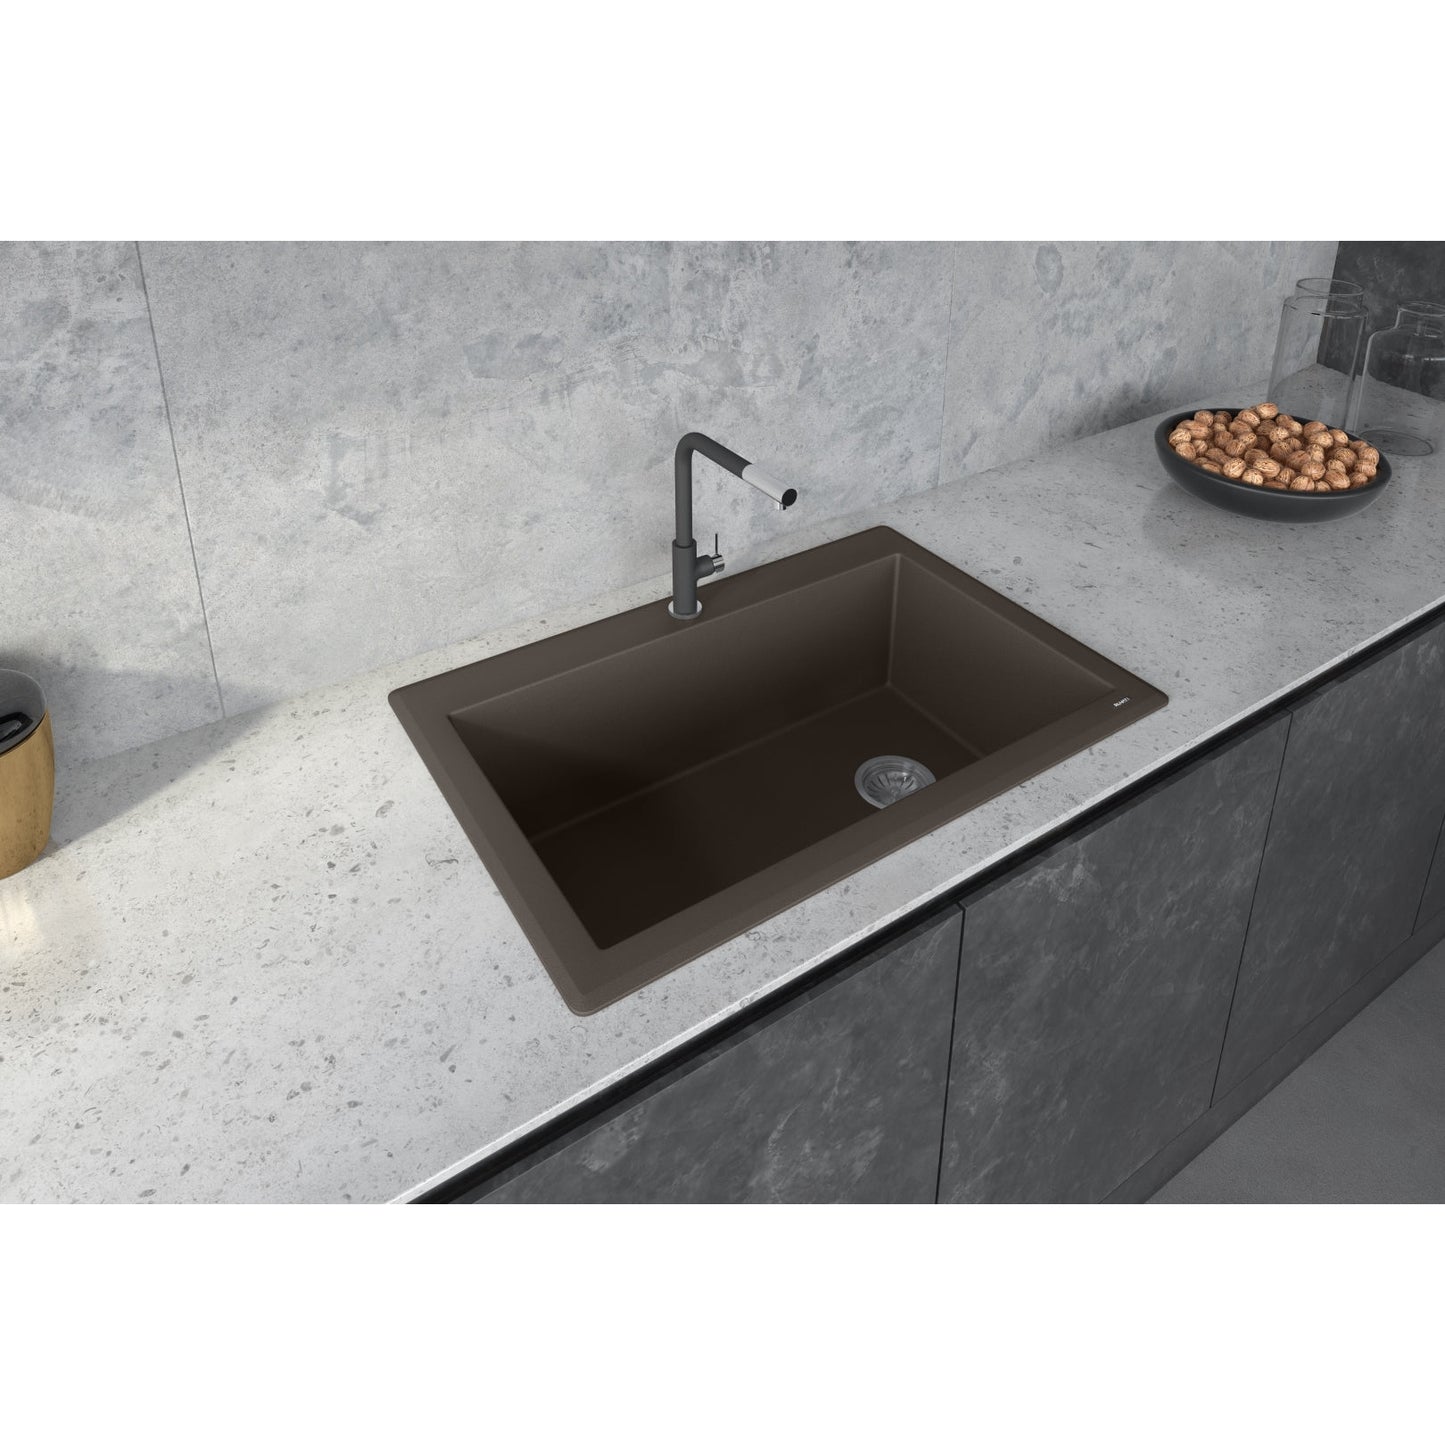 Ruvati epiGranite 33” x 22” Espresso Brown Drop-in Granite Composite Single Bowl Kitchen Sink With Basket Strainer and Drain Assembly